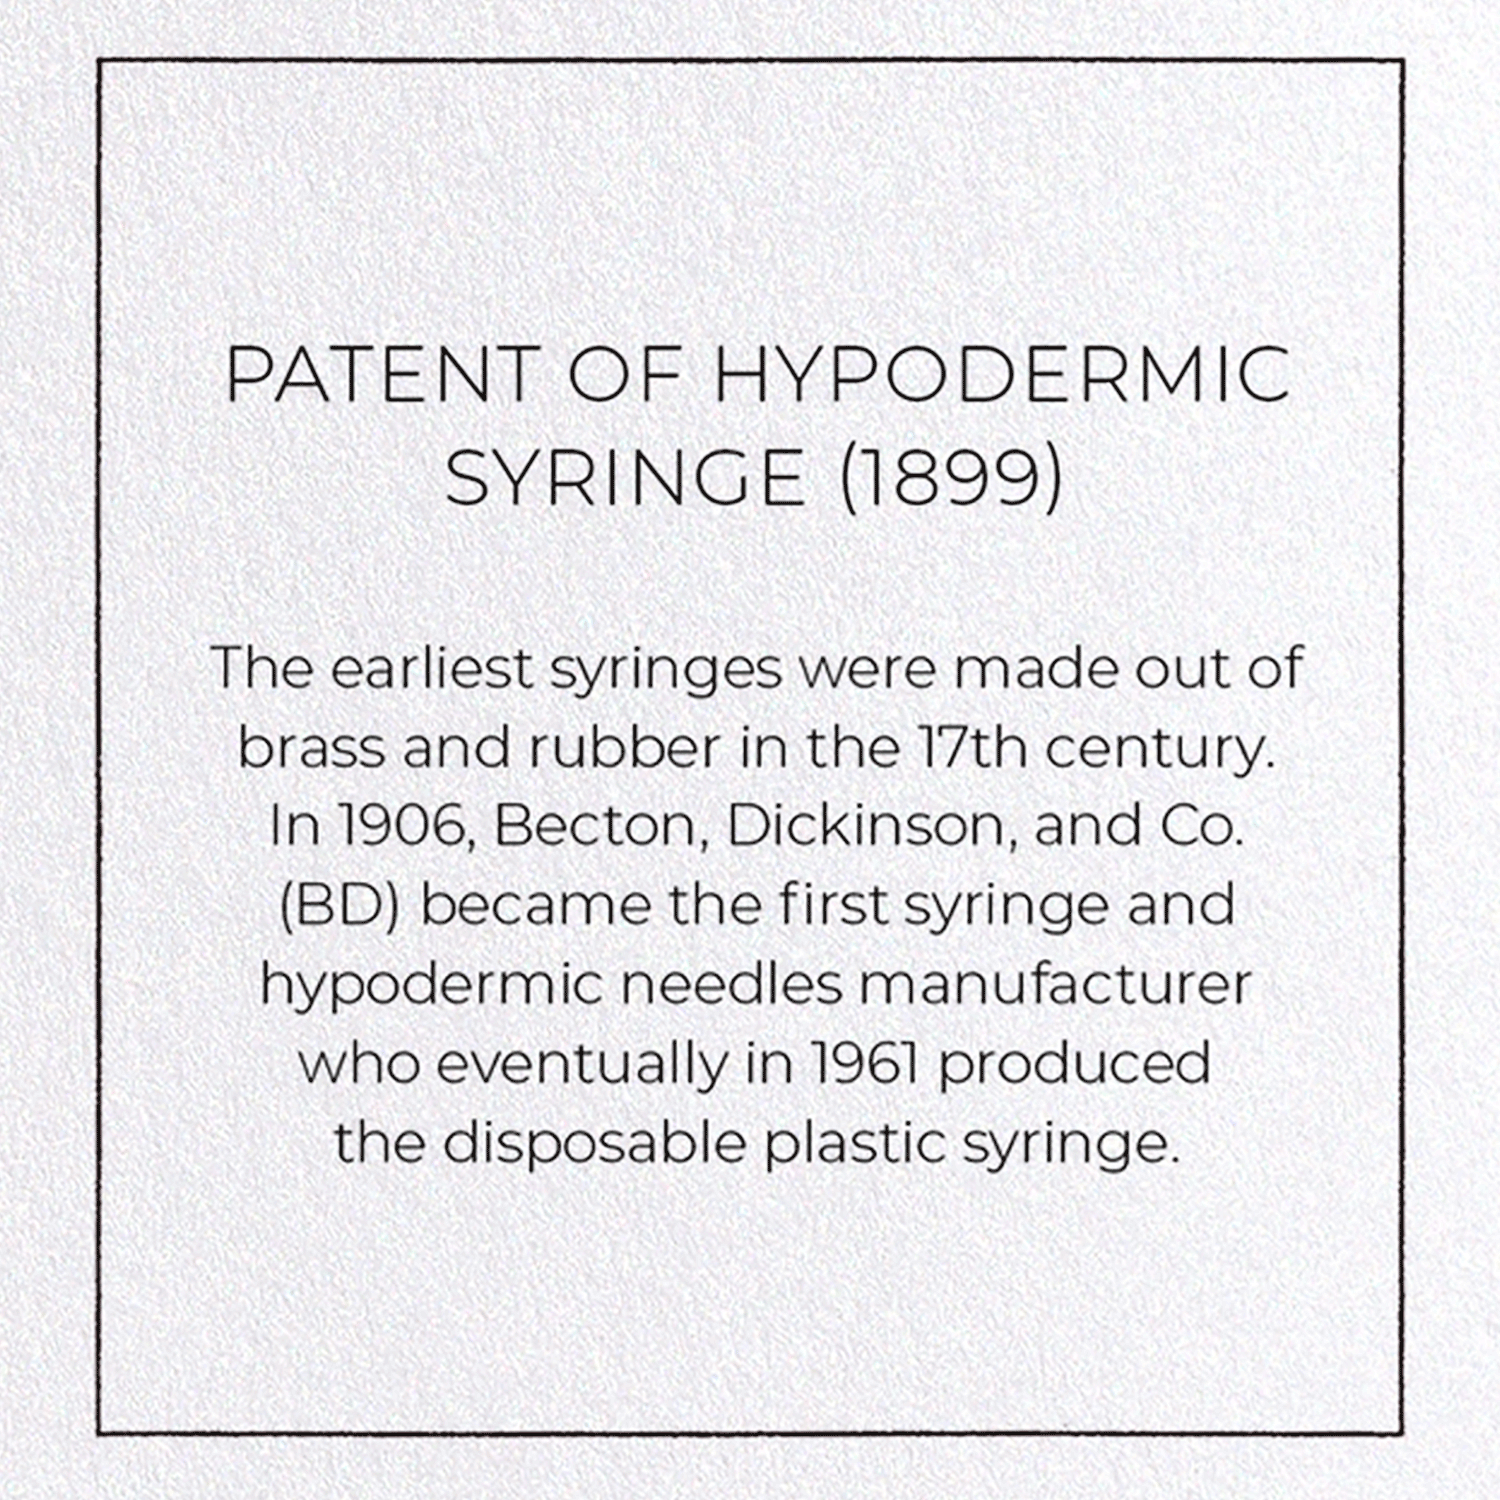 PATENT OF HYPODERMIC SYRINGE (1899)